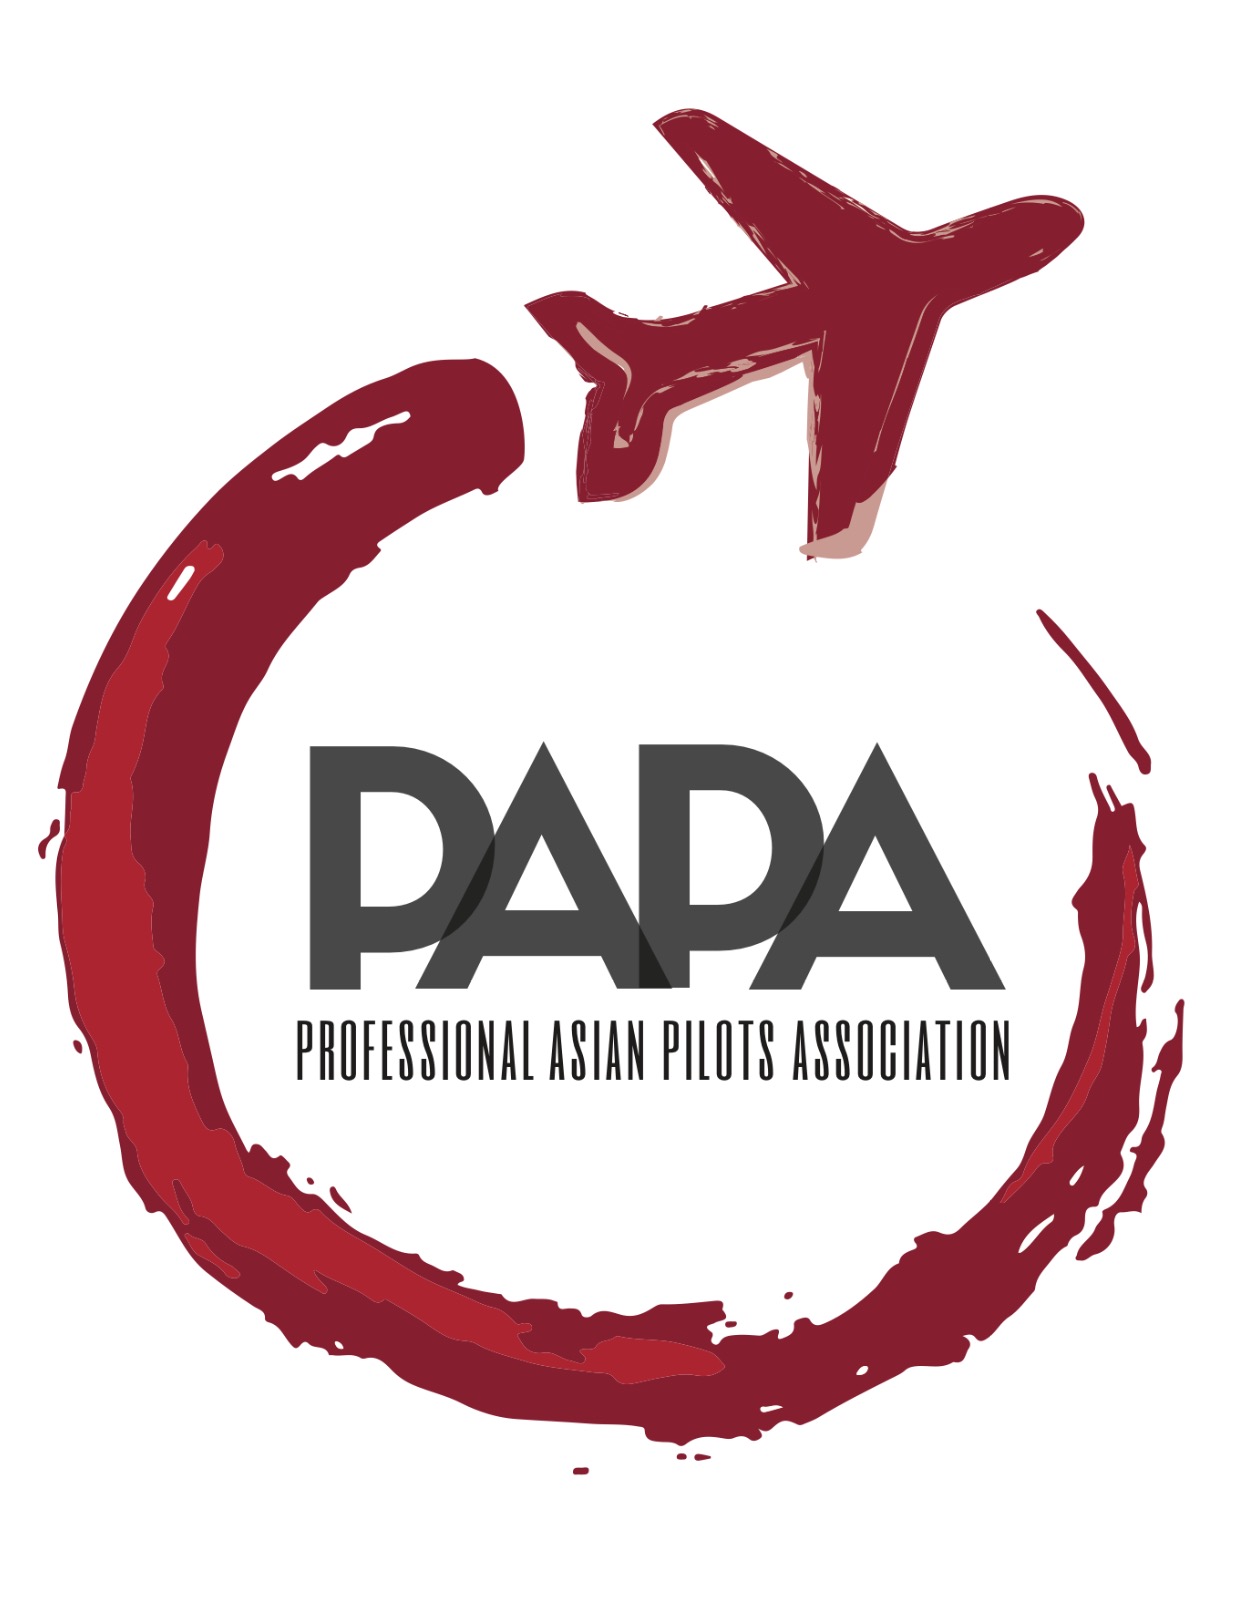 Professional Asian Pilots Association logo